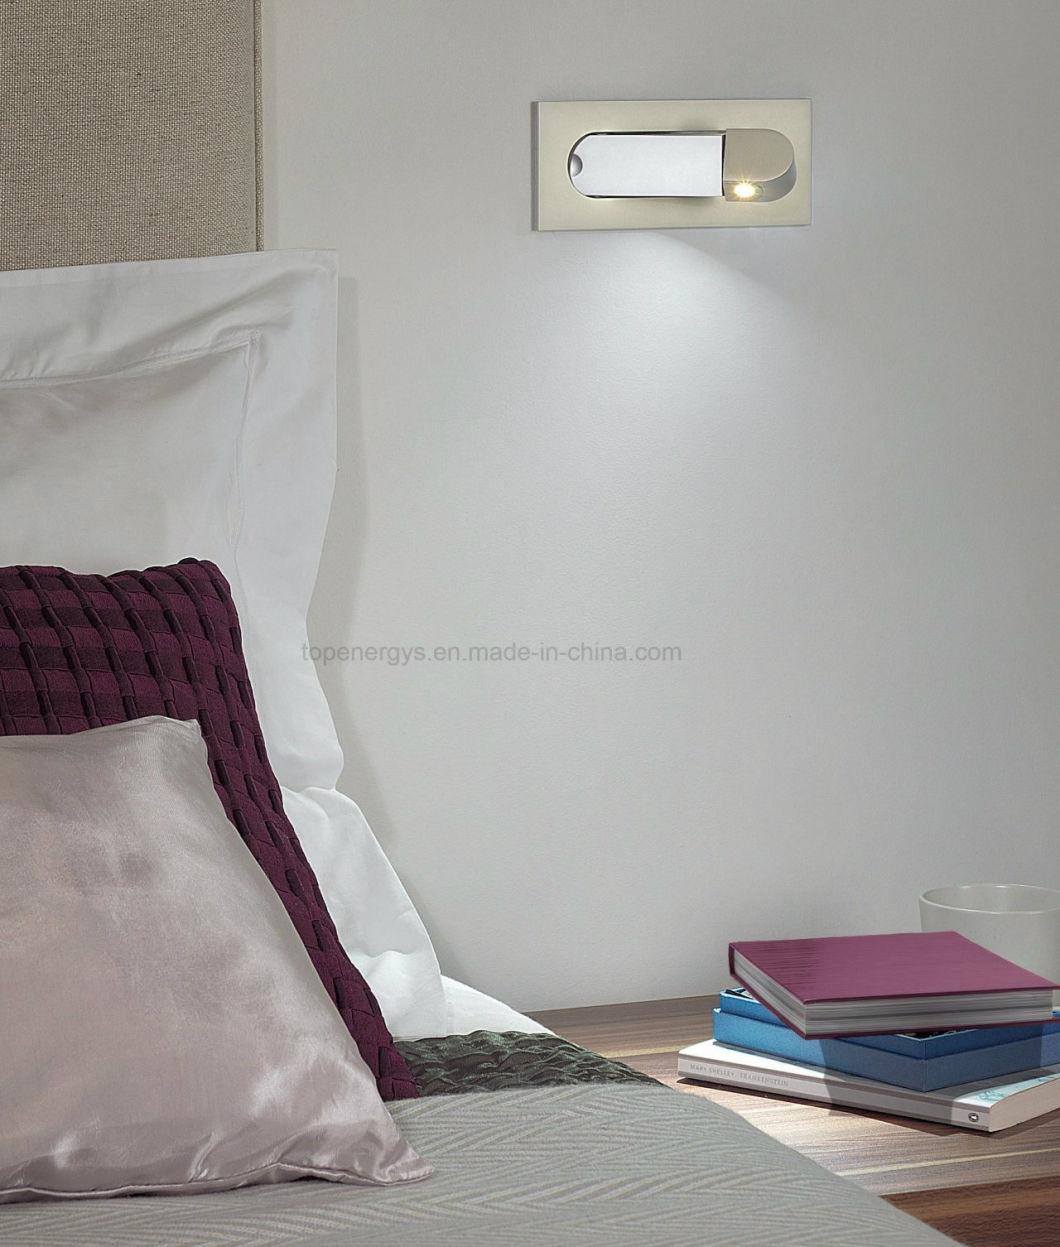 Rotatable LED Wall Lamp Bh-006 Decorative Adjustable Headboard Light Hotel Bedside Reading Light